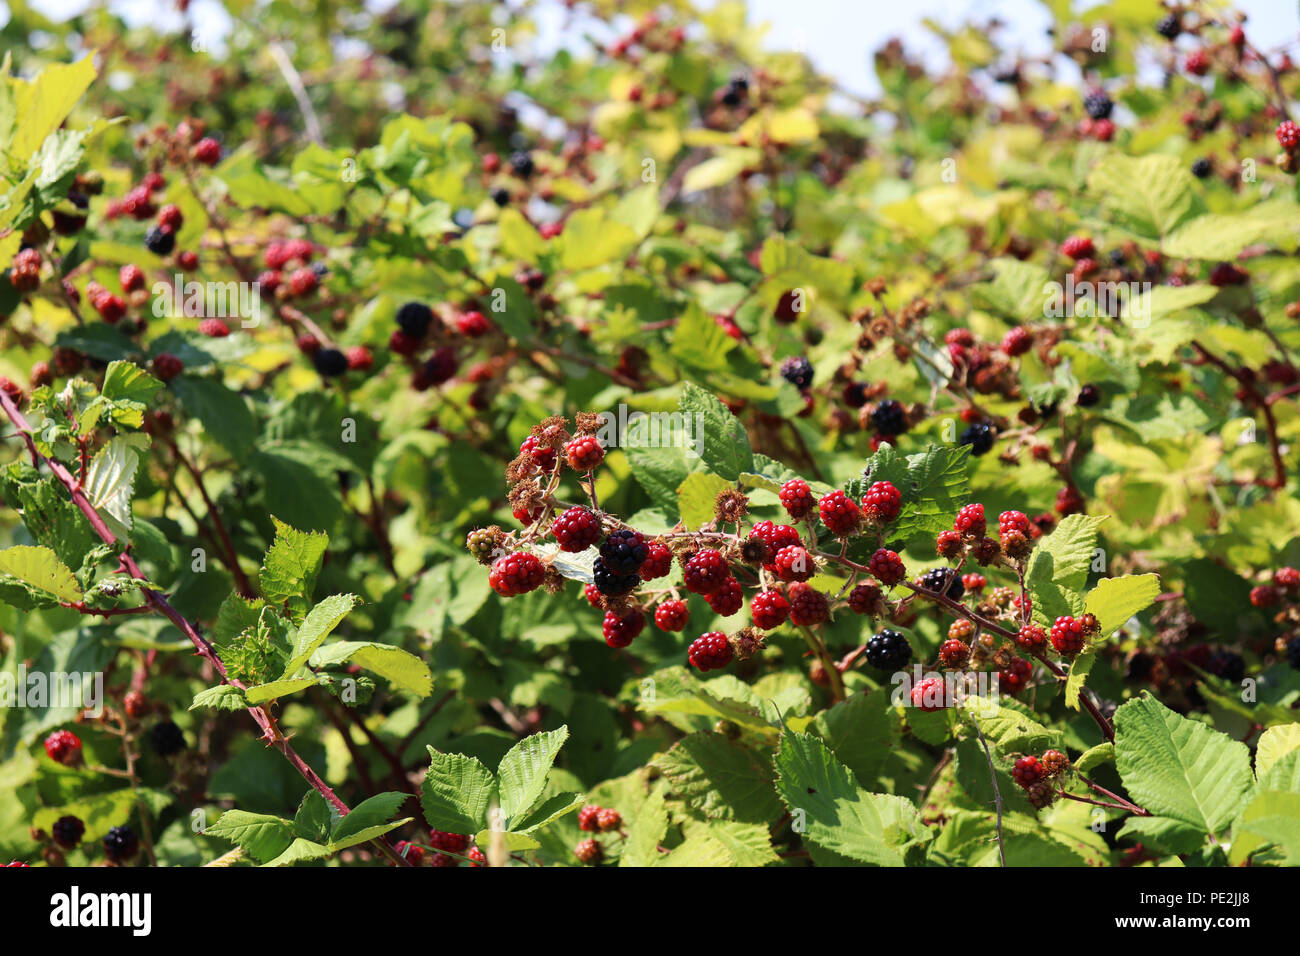 Juicy berries growing on a bush Stock Photo